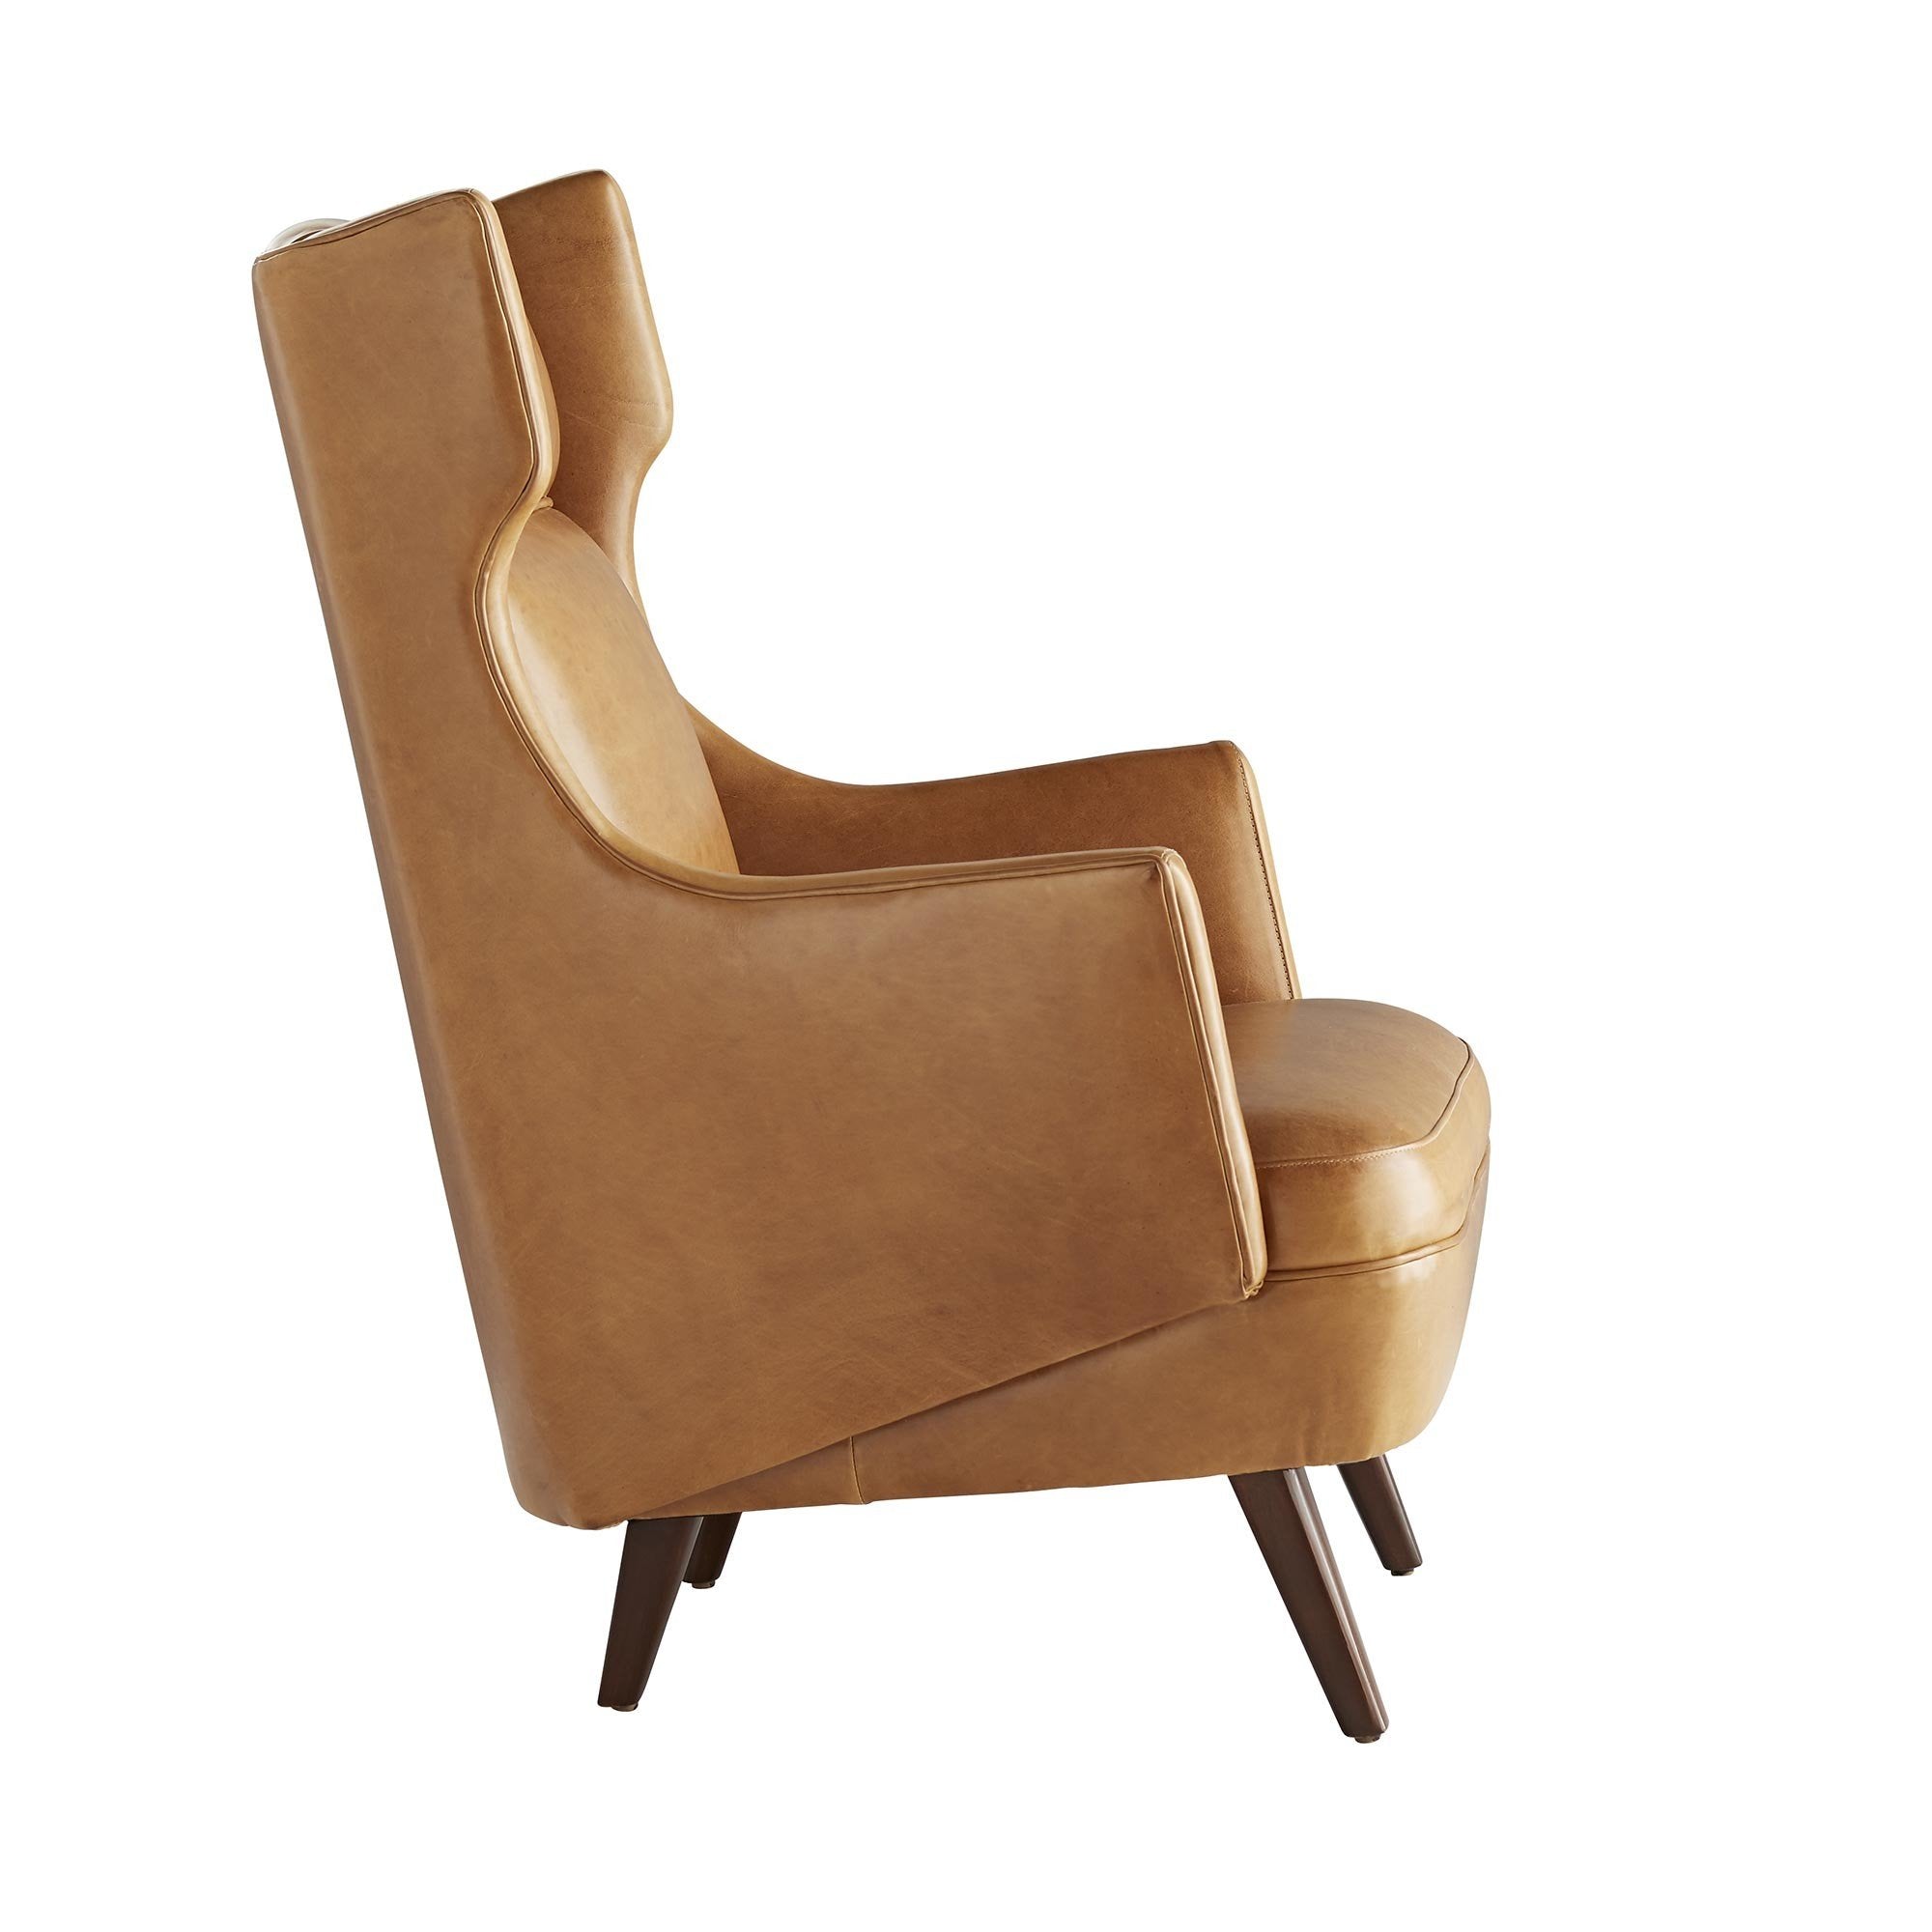 Budelli Wing Chair Cognac Leather Dark Walnut